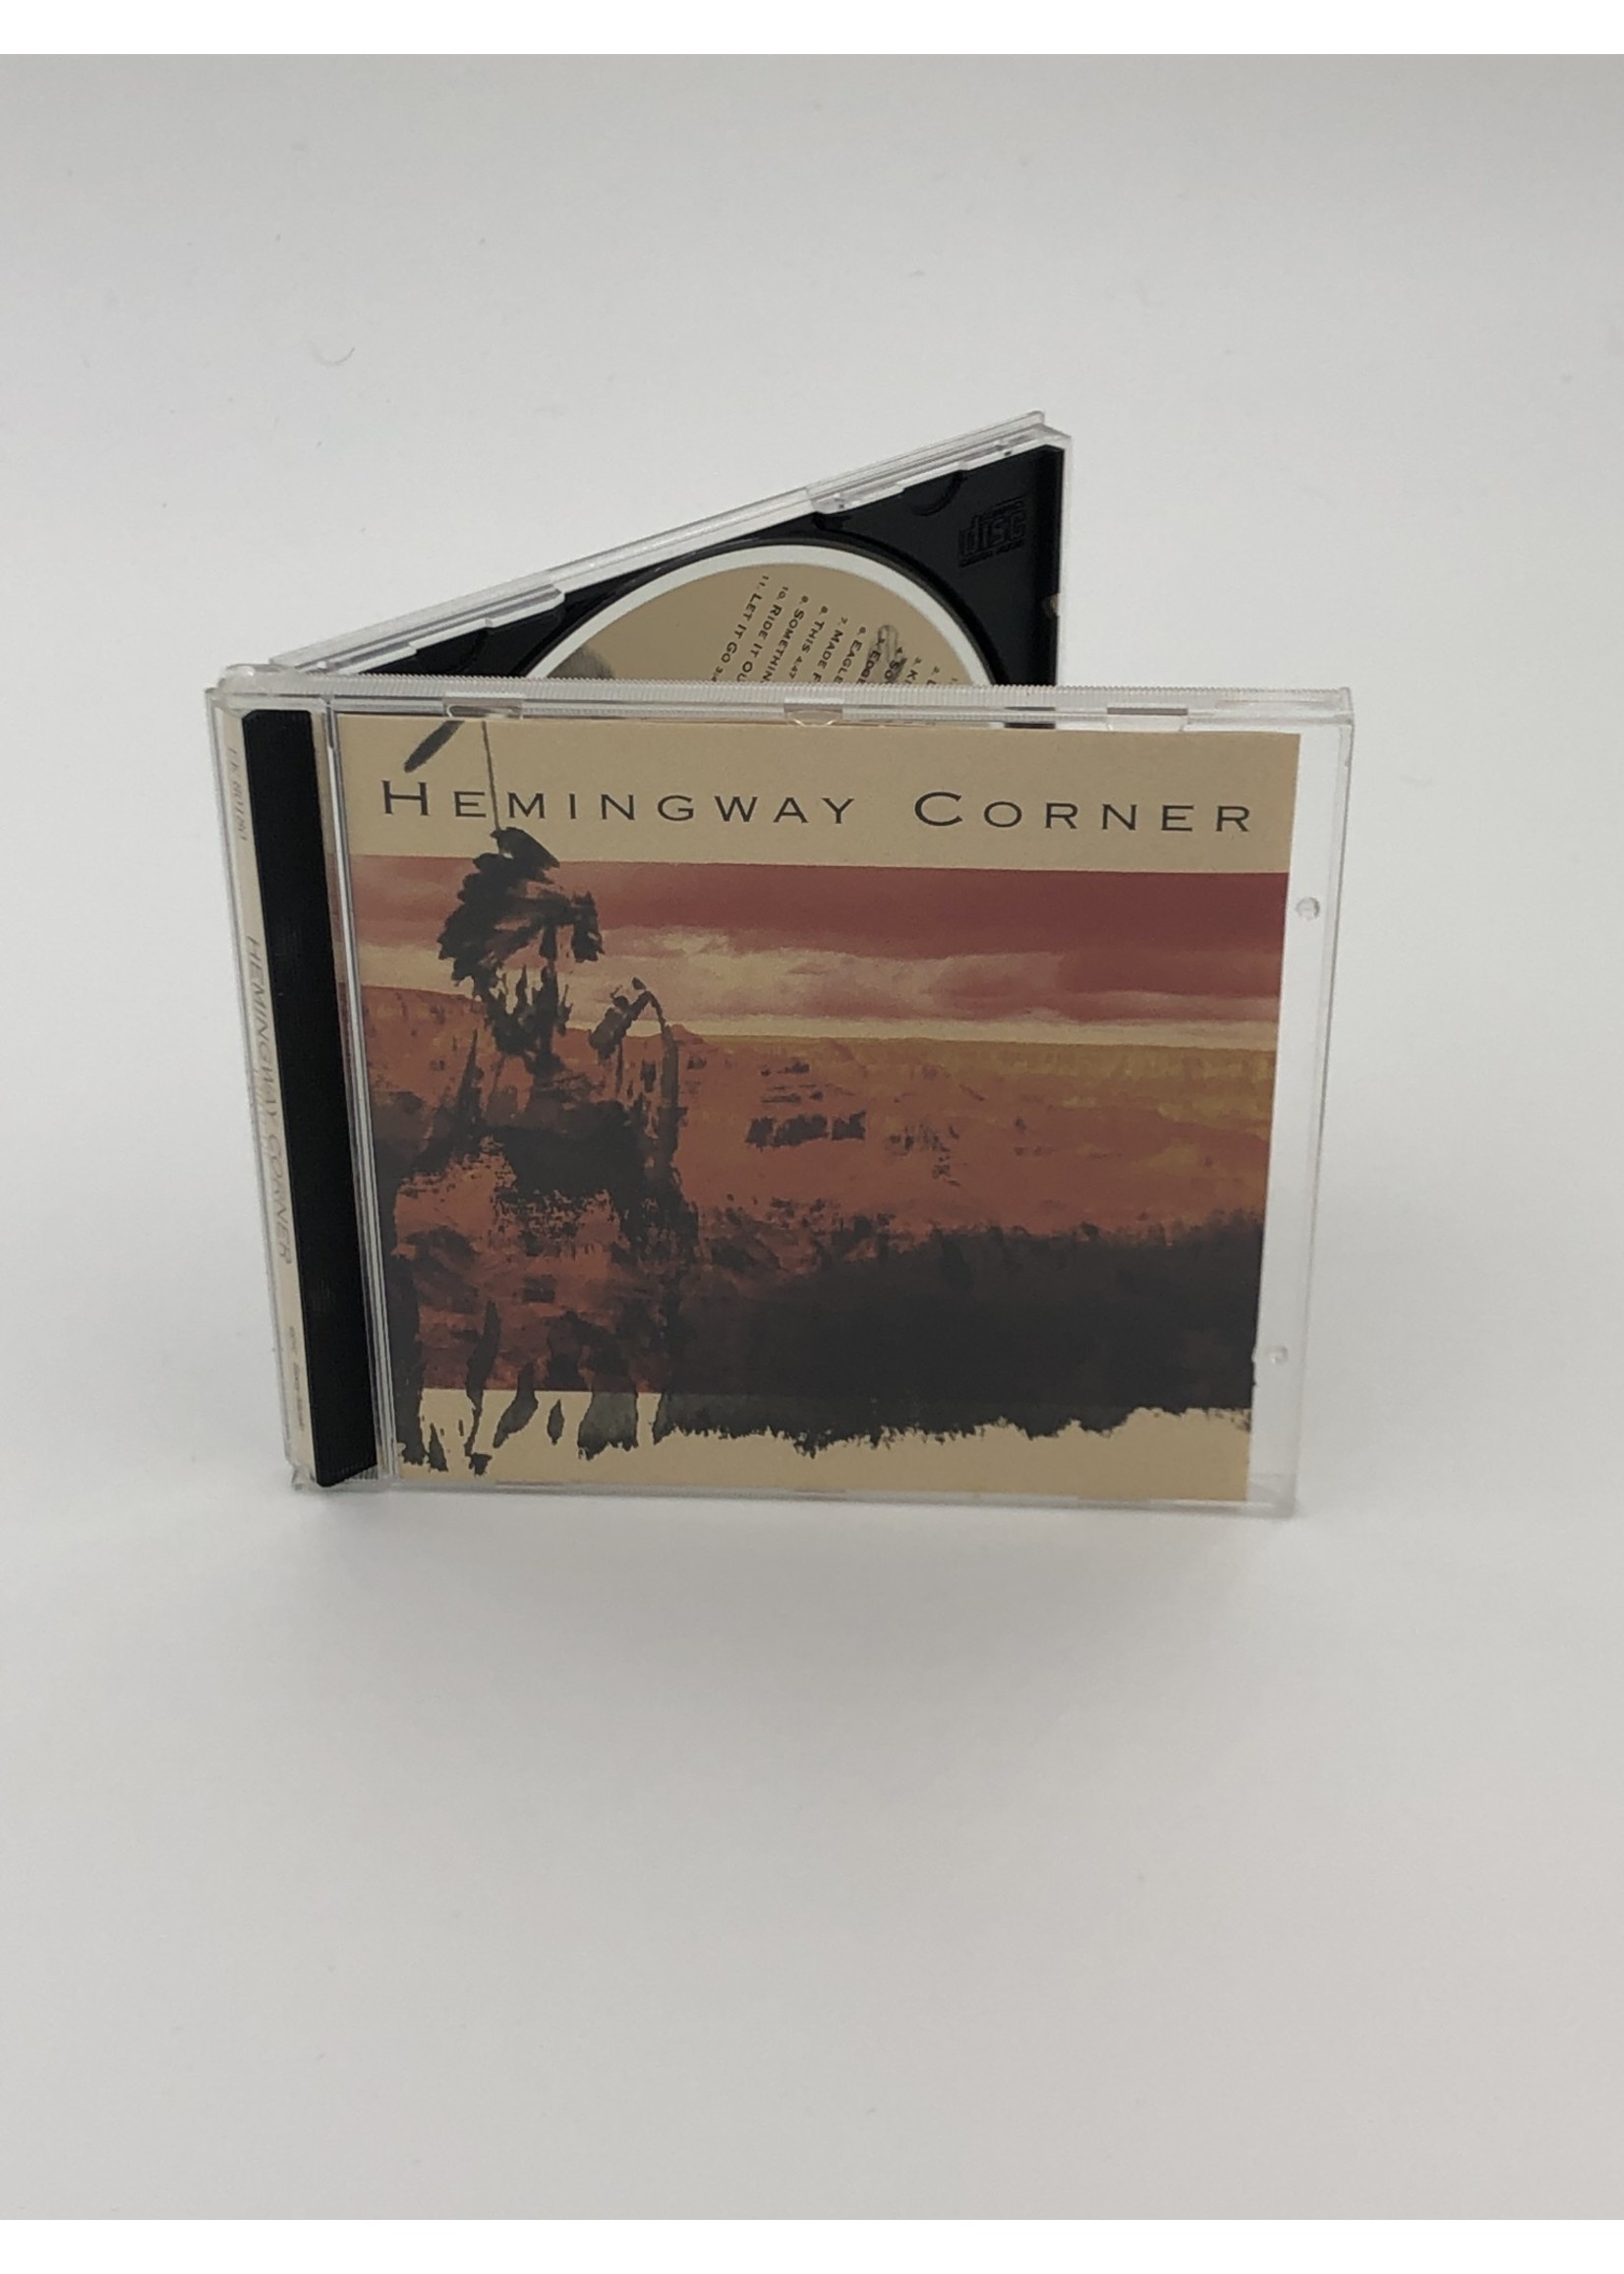 CD Hemingway Corner: Hemingway Corner CD